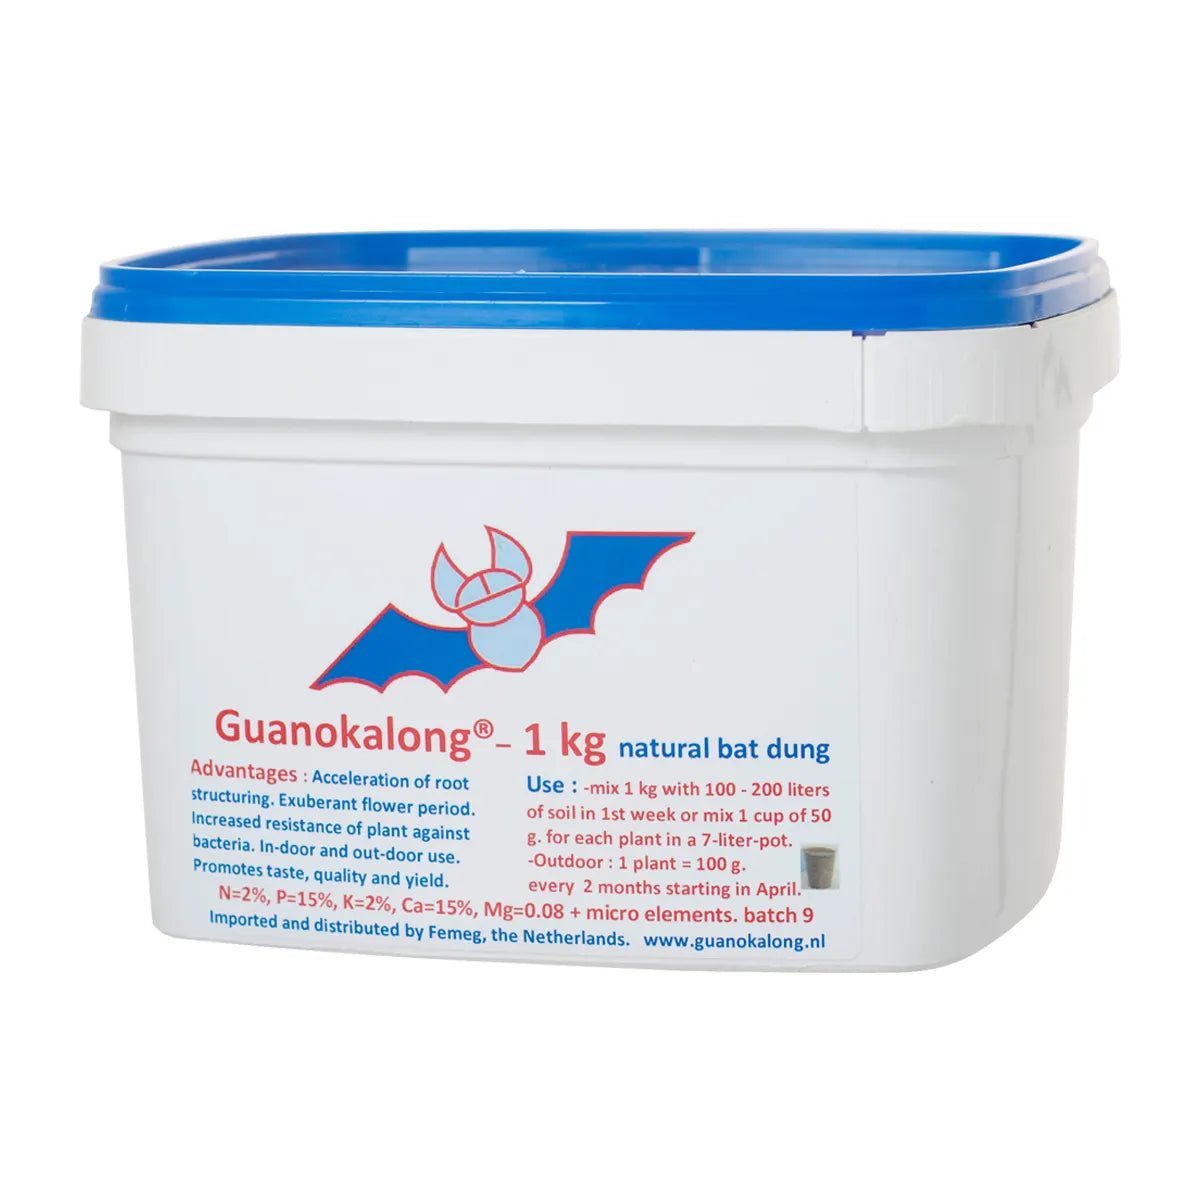 GK-Organics - Guanokalong Powder